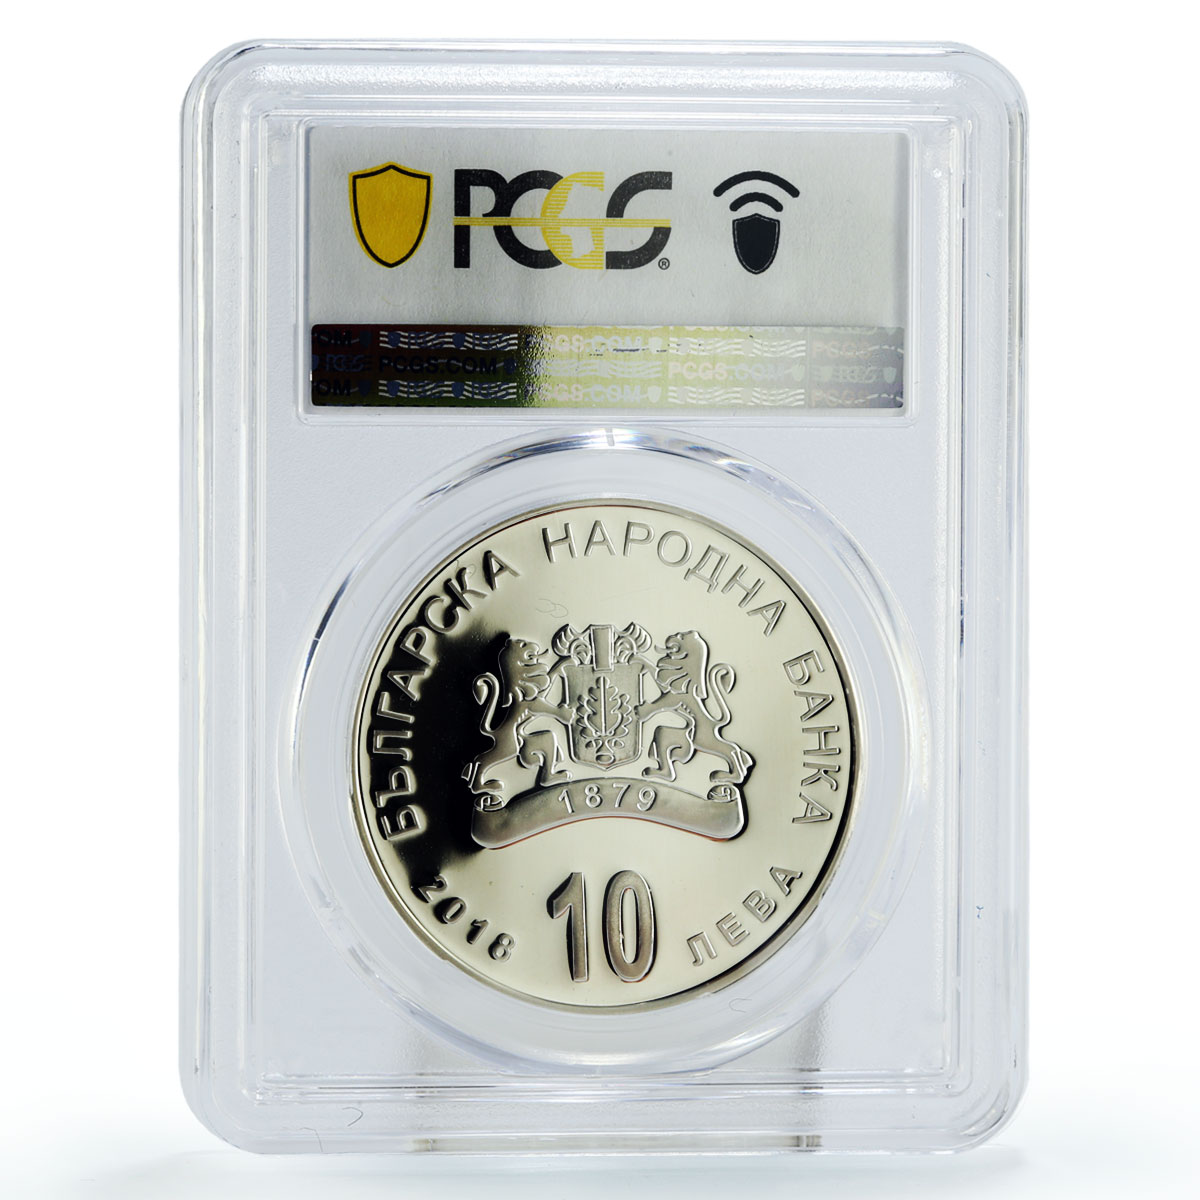 Bulgaria 10 leva Sliven Old Elm Tree Symbol PR69 PCGS silver coin 2018